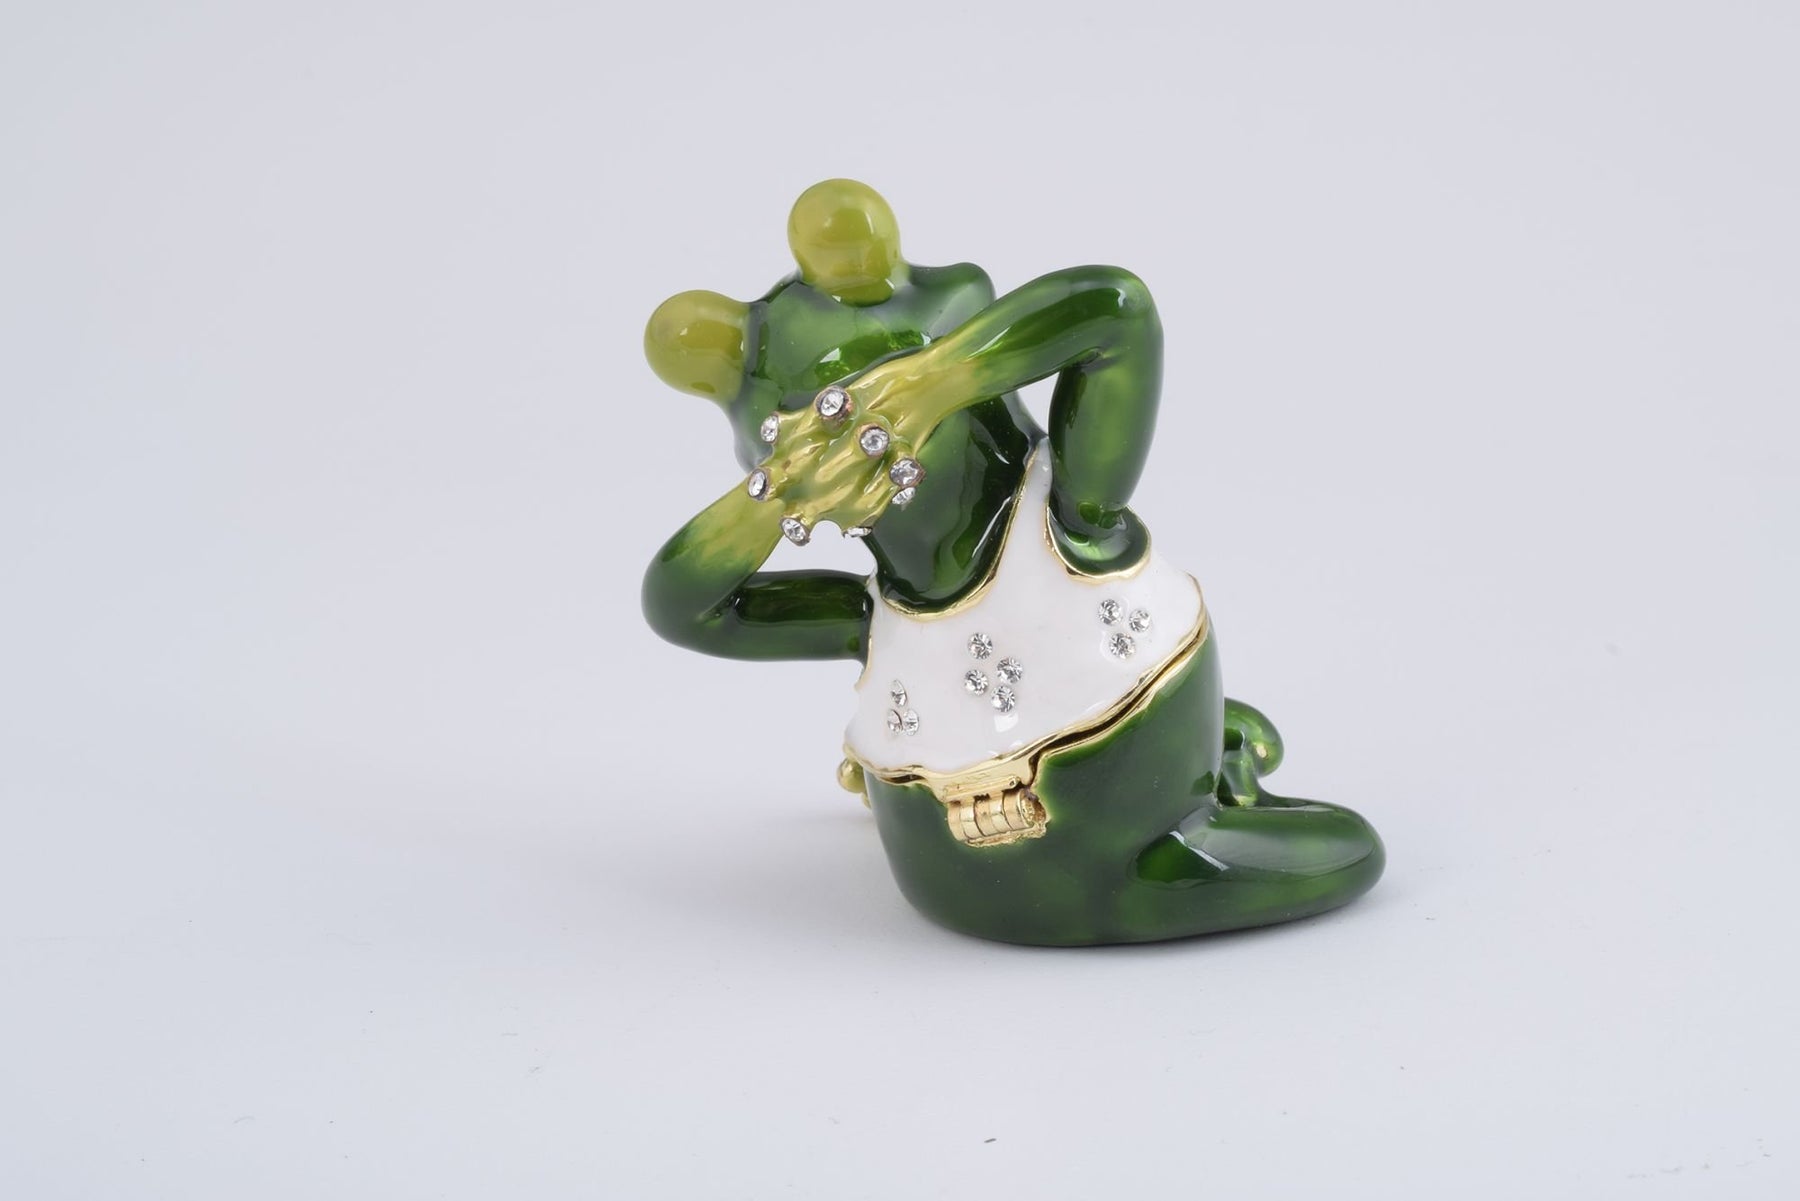 Gymnastic Frog with a White Shirt  Keren Kopal